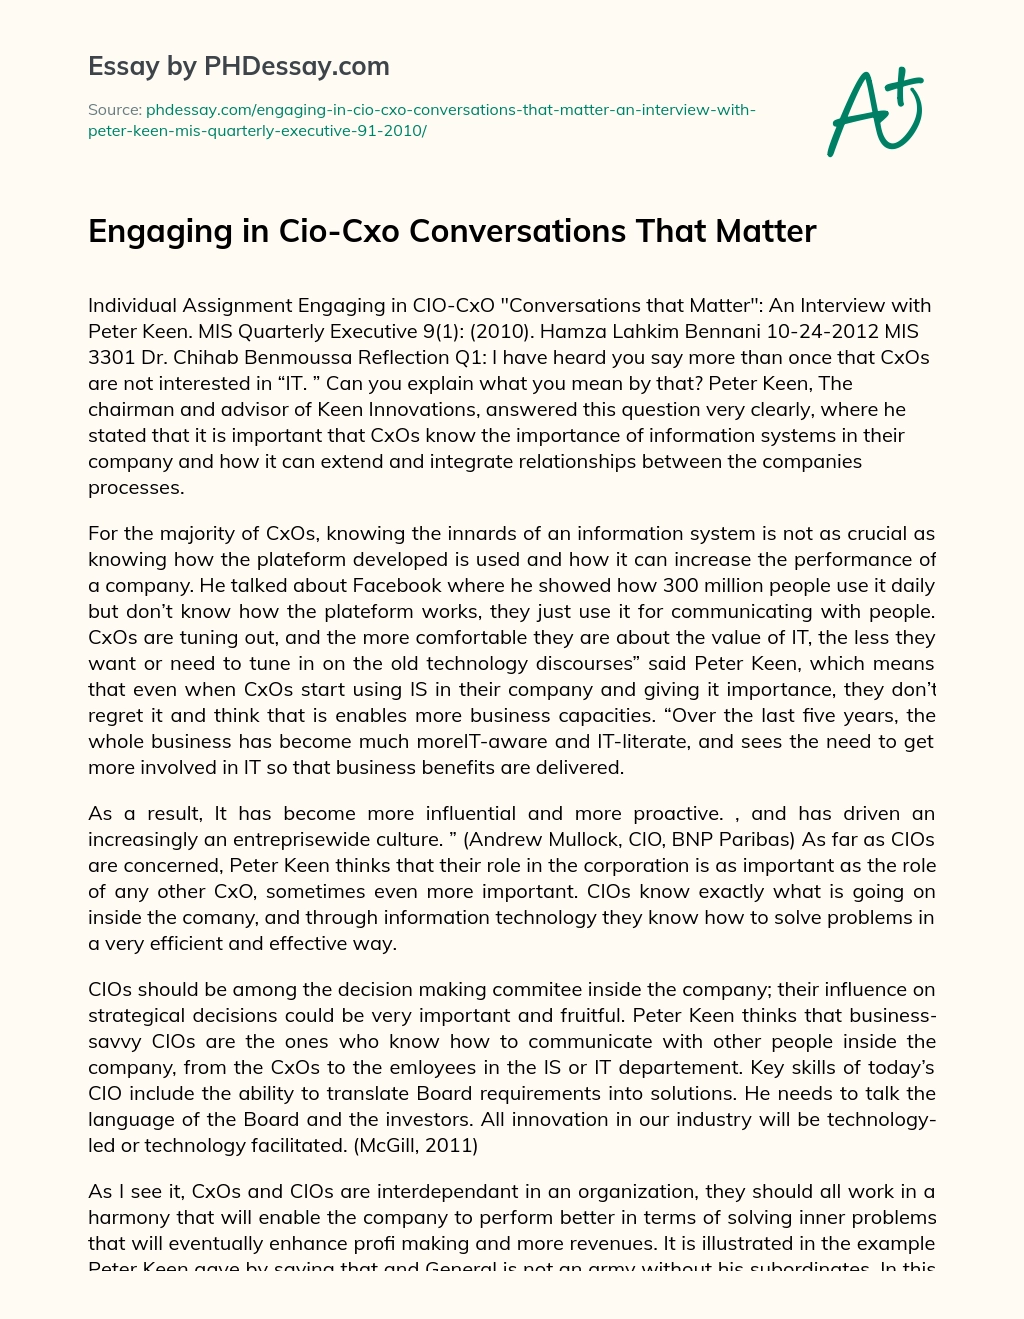 Engaging in Cio-Cxo Conversations That Matter essay